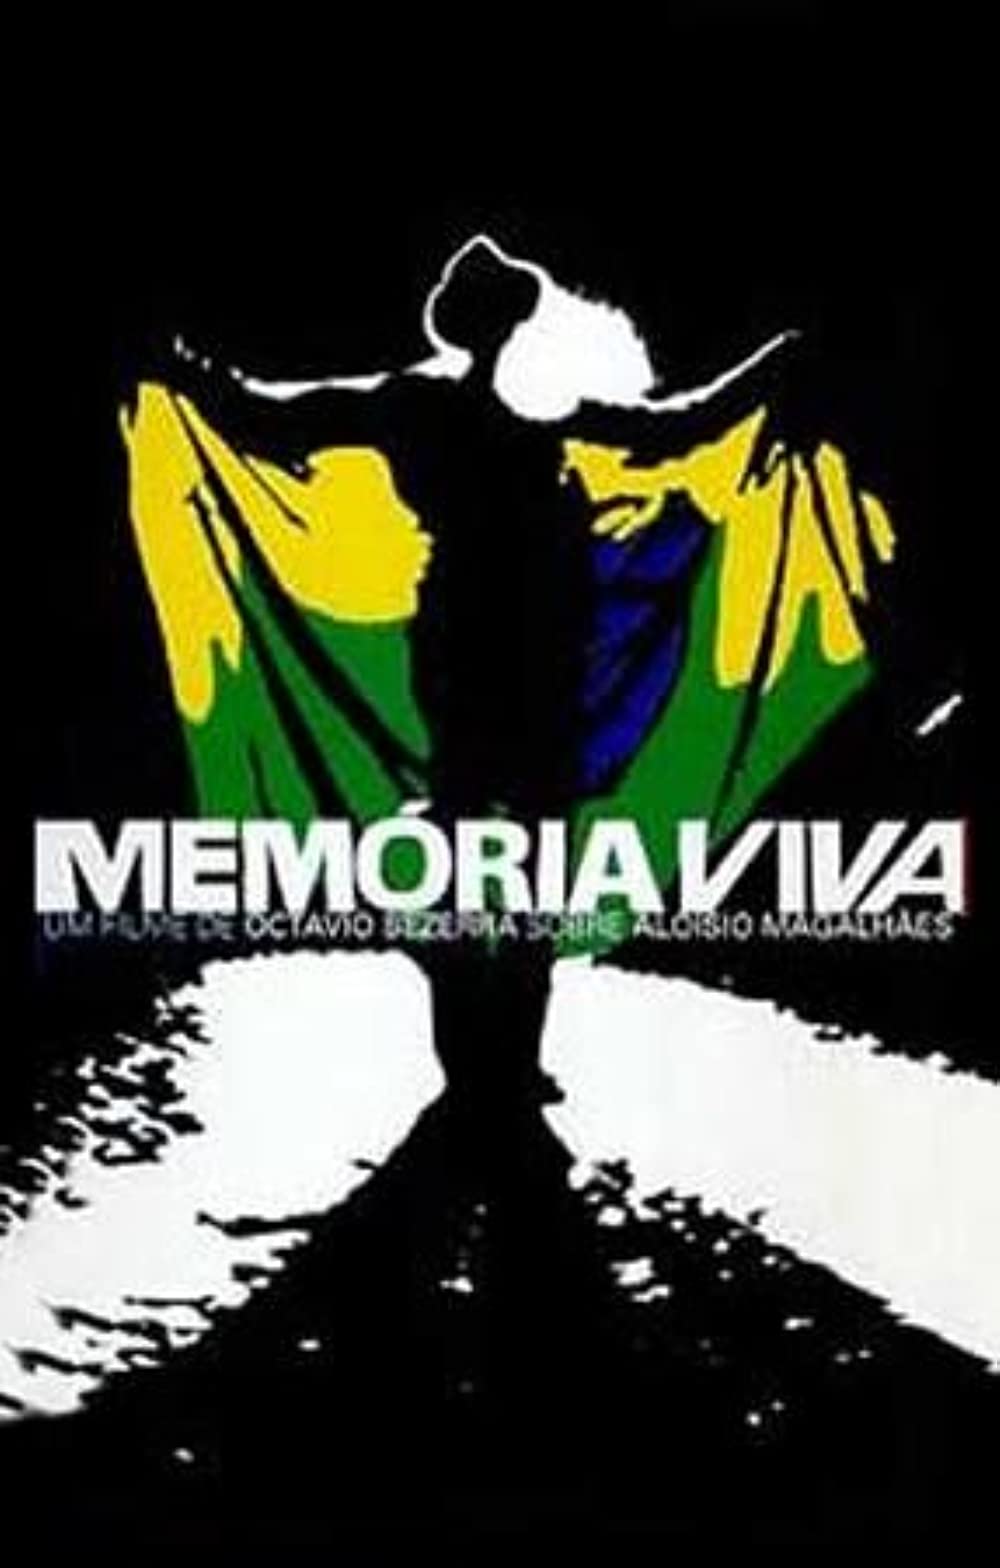 Filmbeschreibung zu Memoria viva